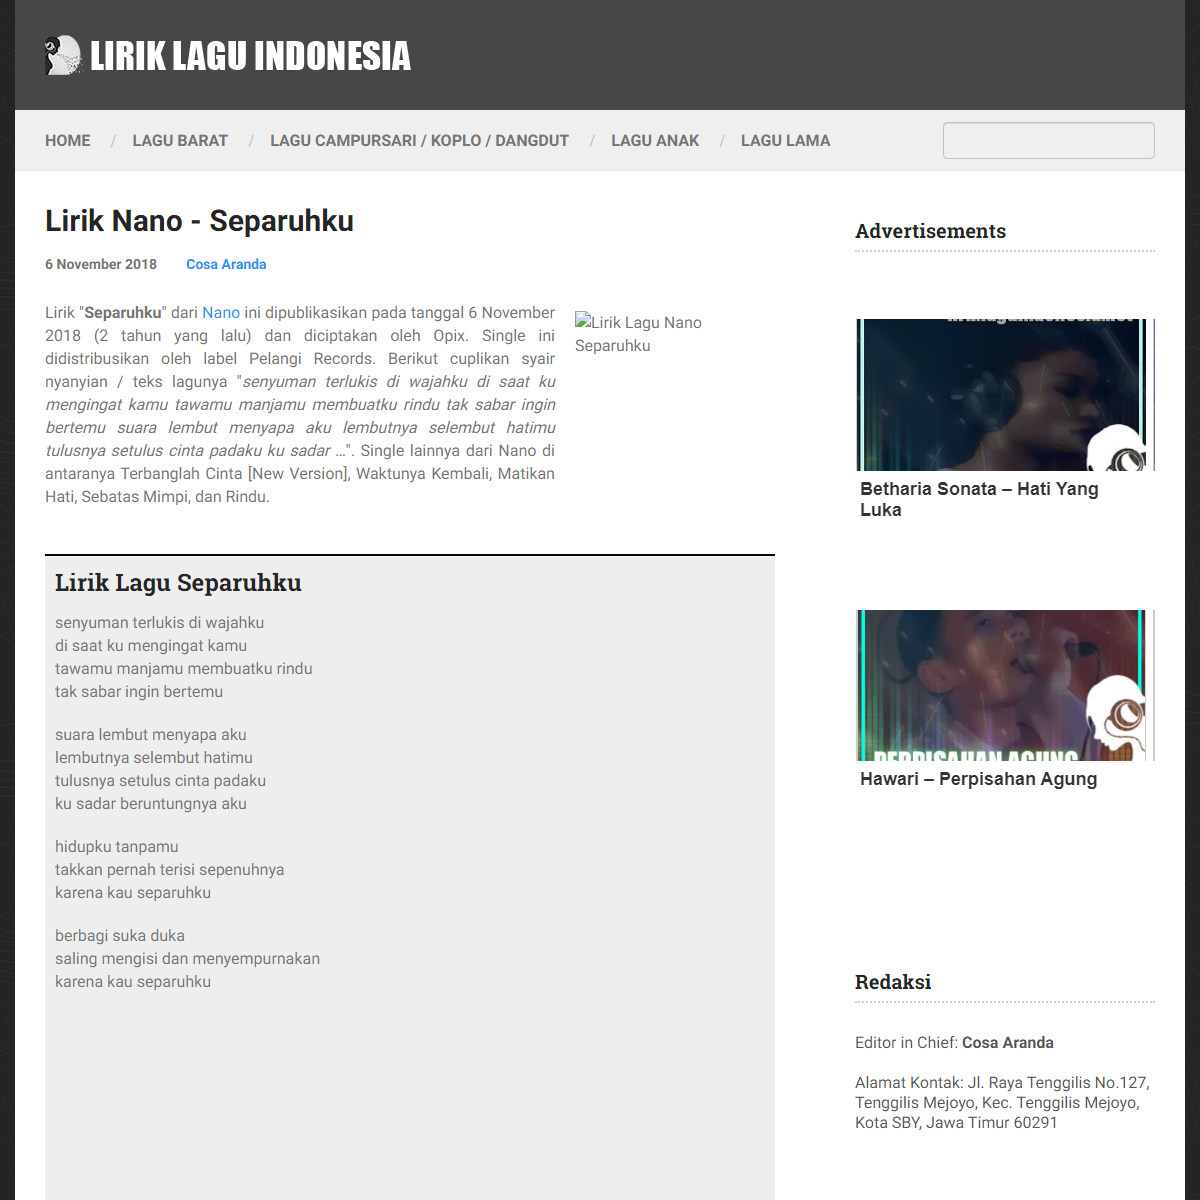 A complete backup of https://liriklaguindonesia.net/nano-separuhku.htm